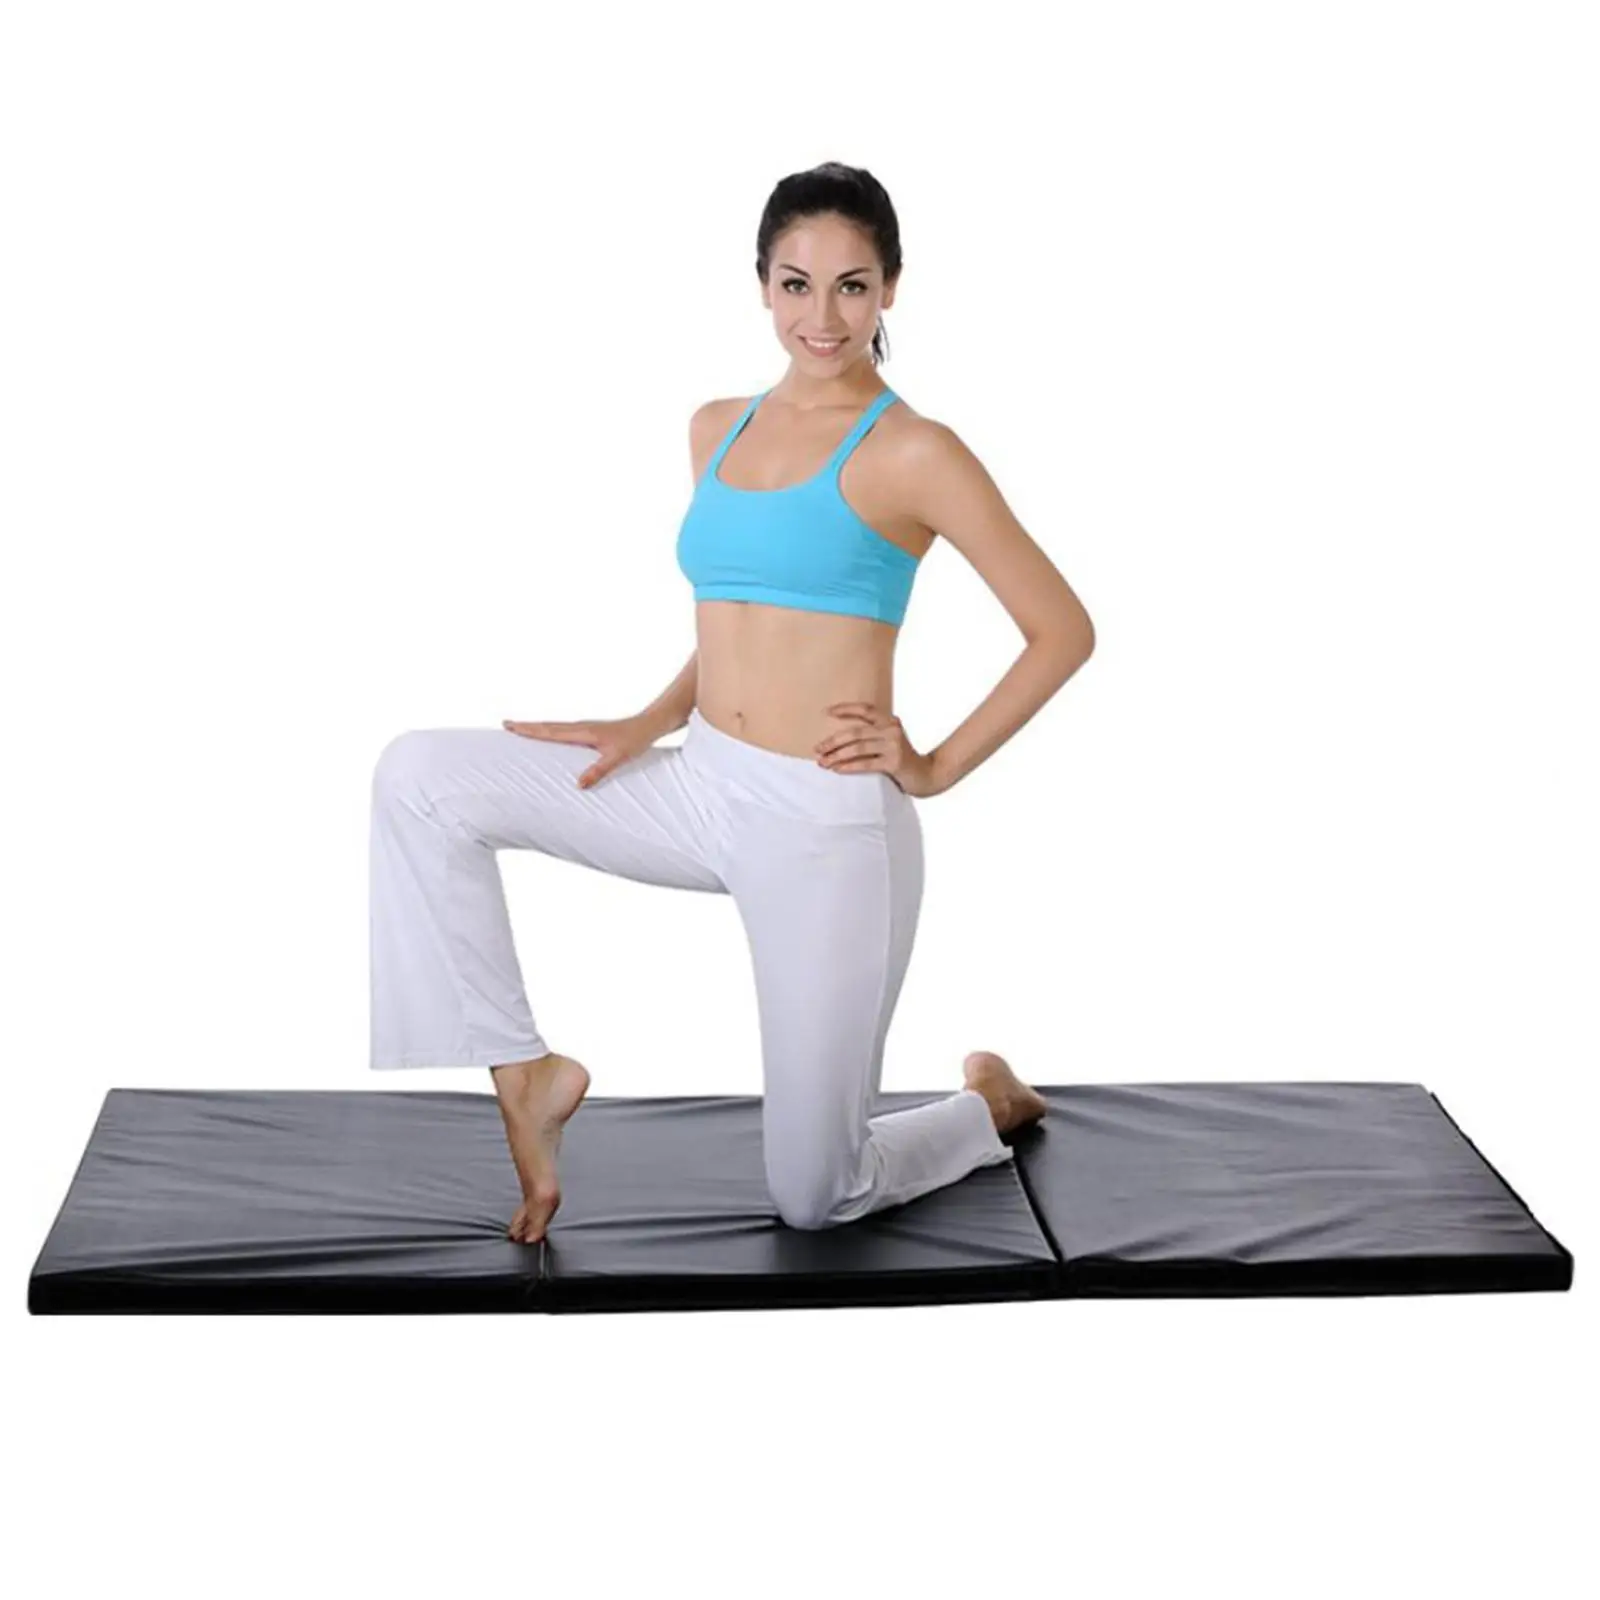 Folding Exercise Gym Protective Flooring for Yoga Tumbling